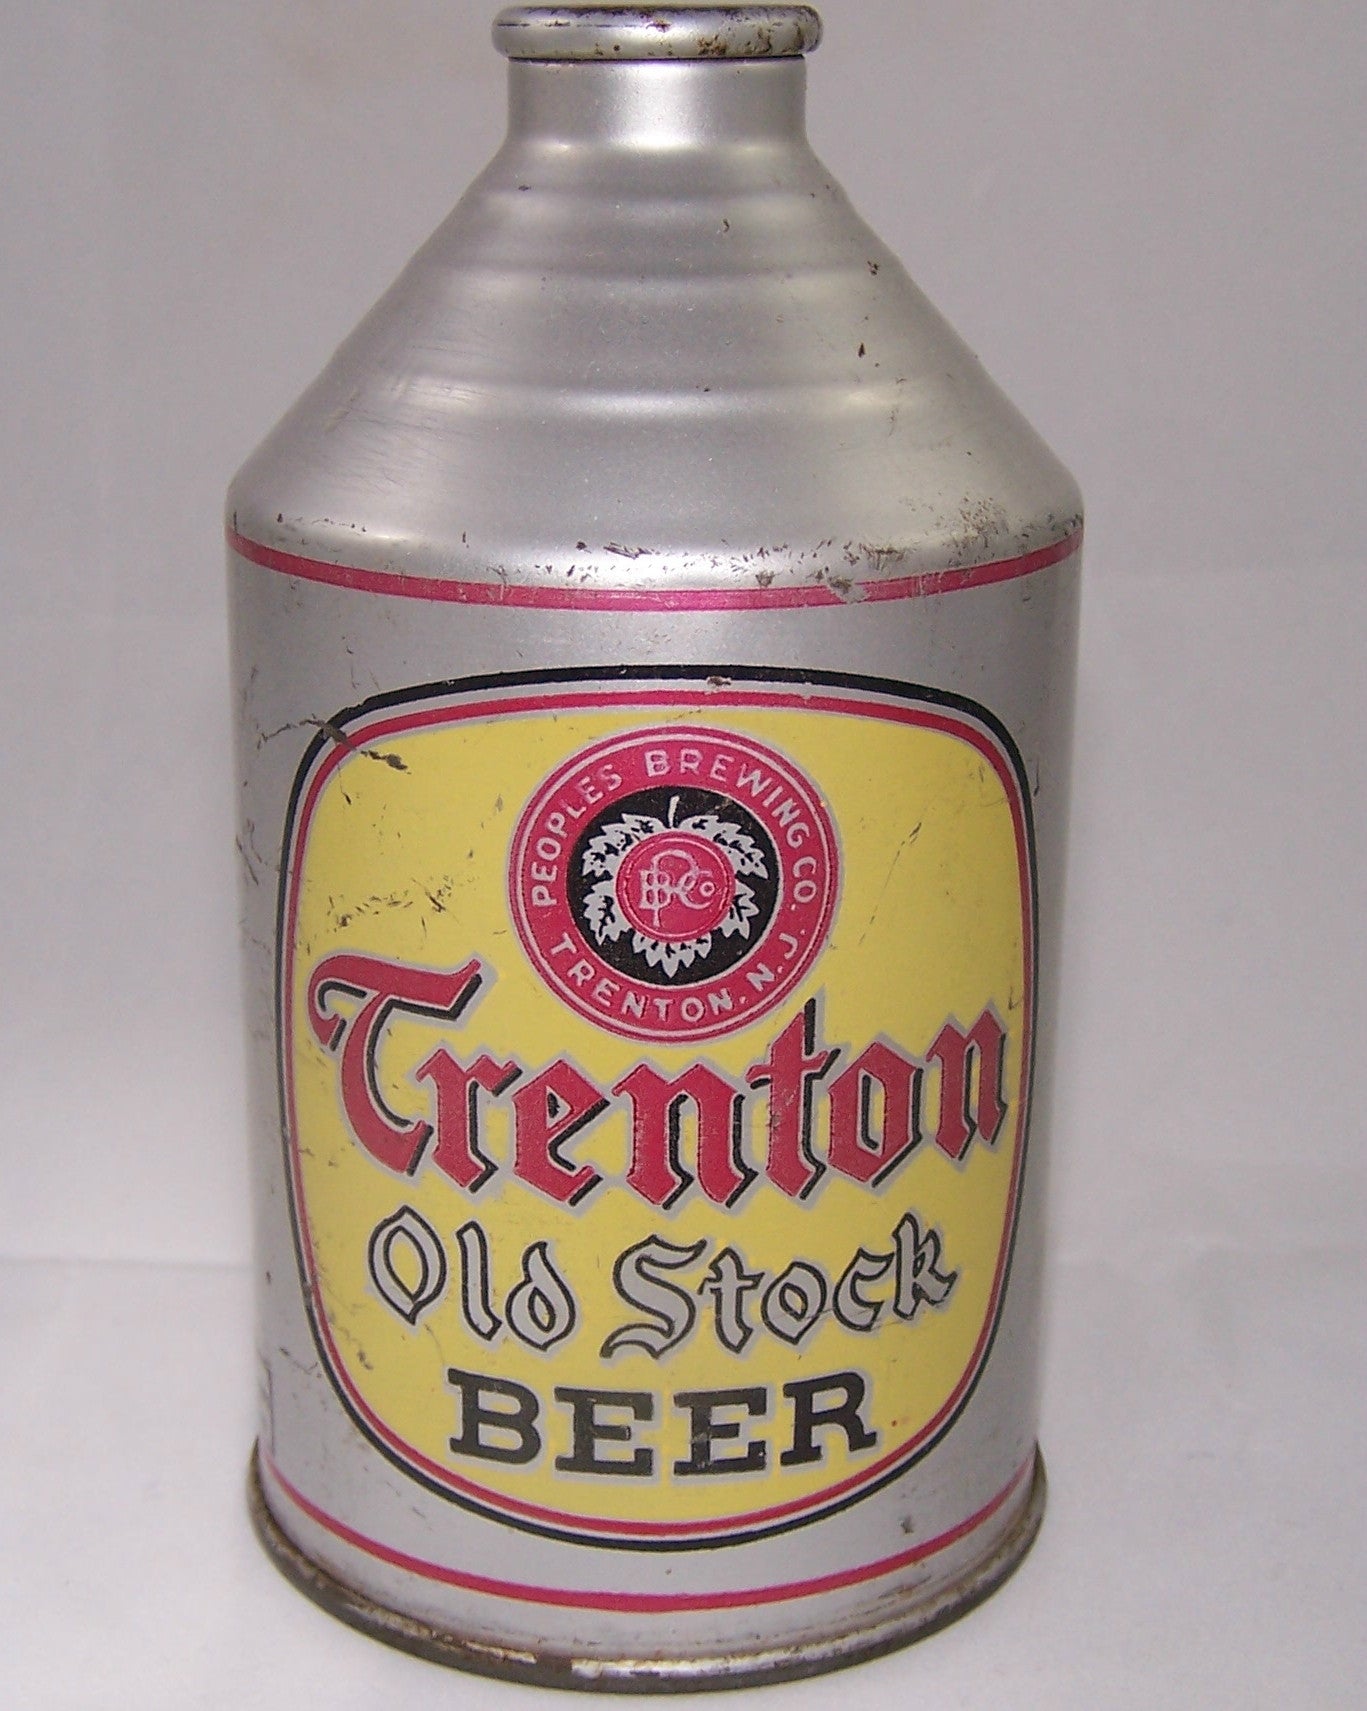 Trenton Old Stock Beer, USBC 199-13, Grade 1-